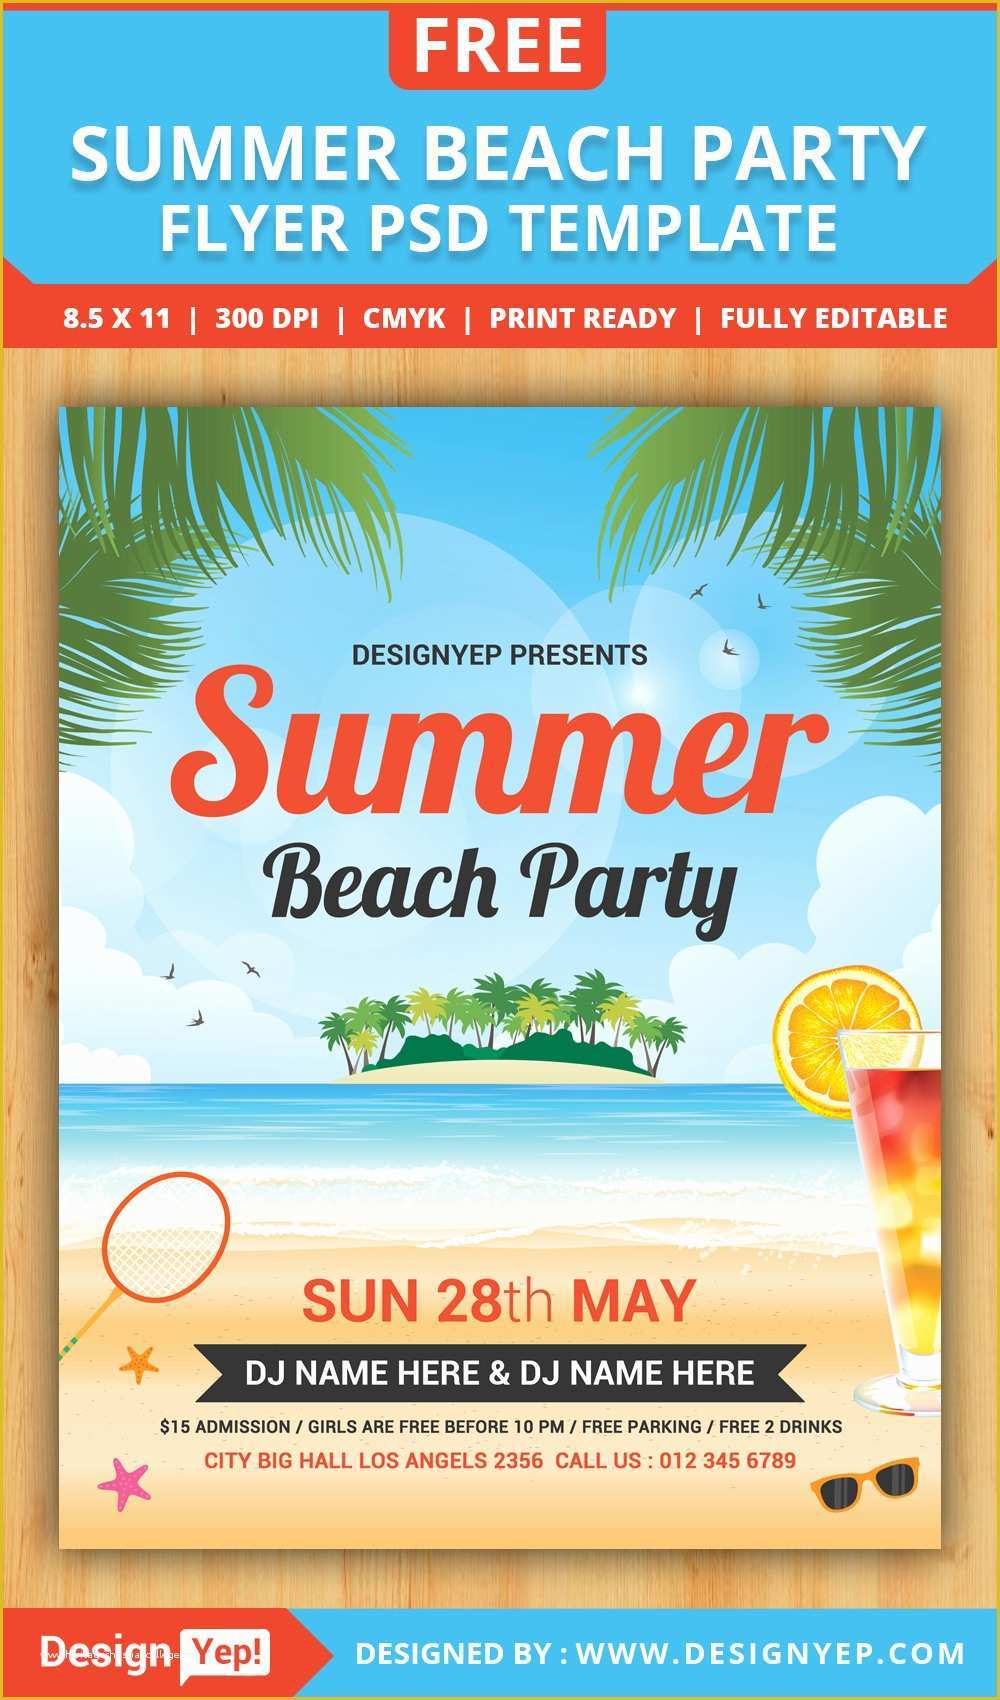 Free Flyer Design Templates Of Free Summer Beach Party Flyer Psd Template Designyep